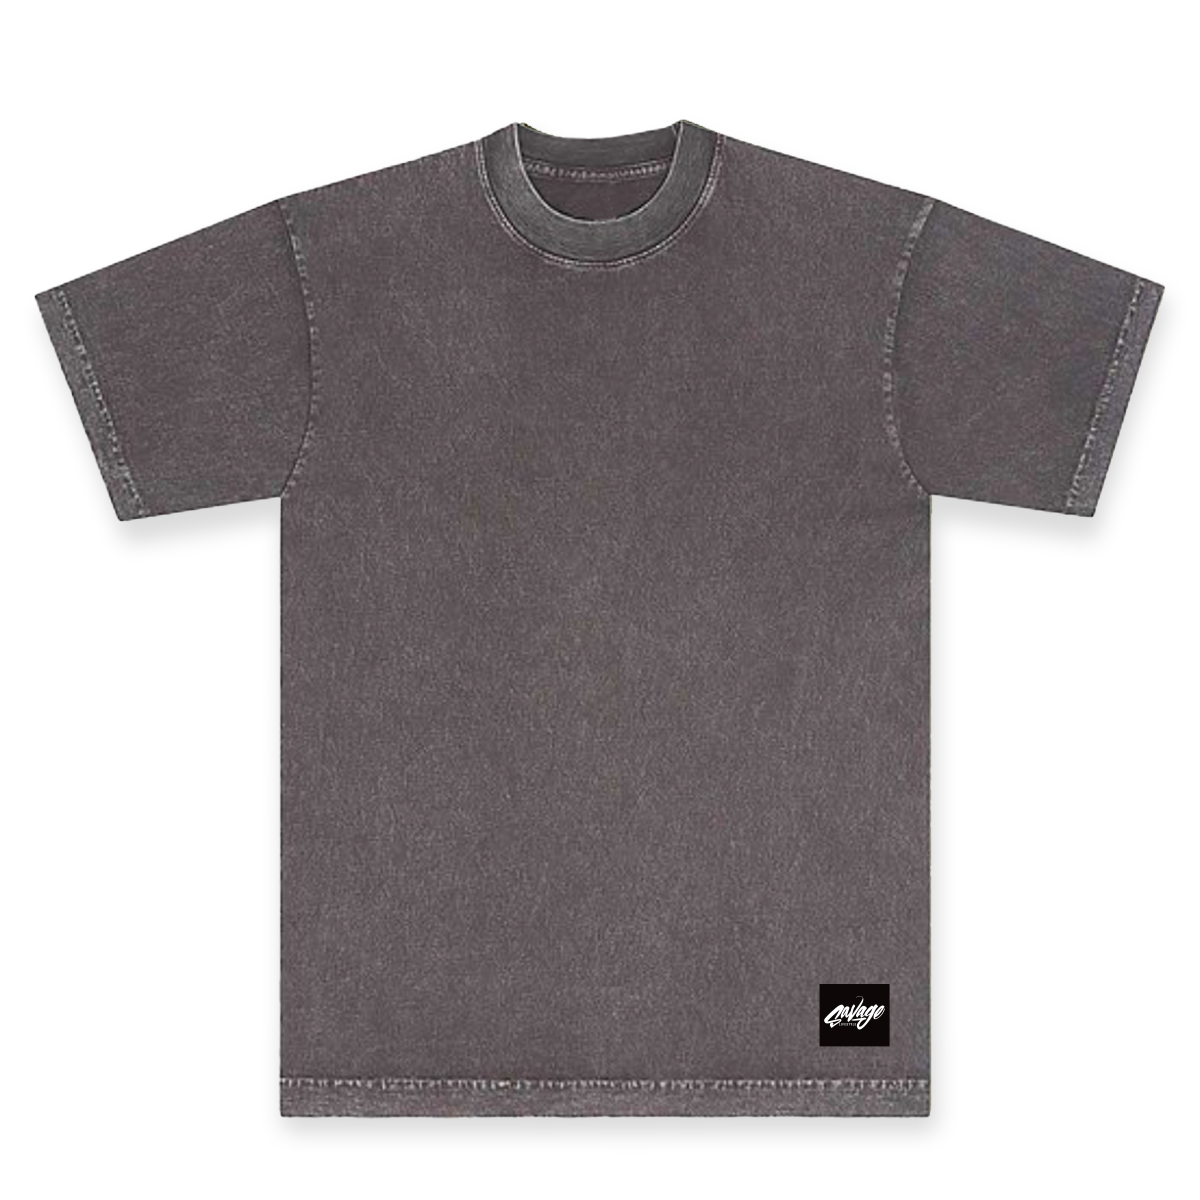 Savage Mineral Wash Crew Neck T Shirt in brown - 6.5 oz